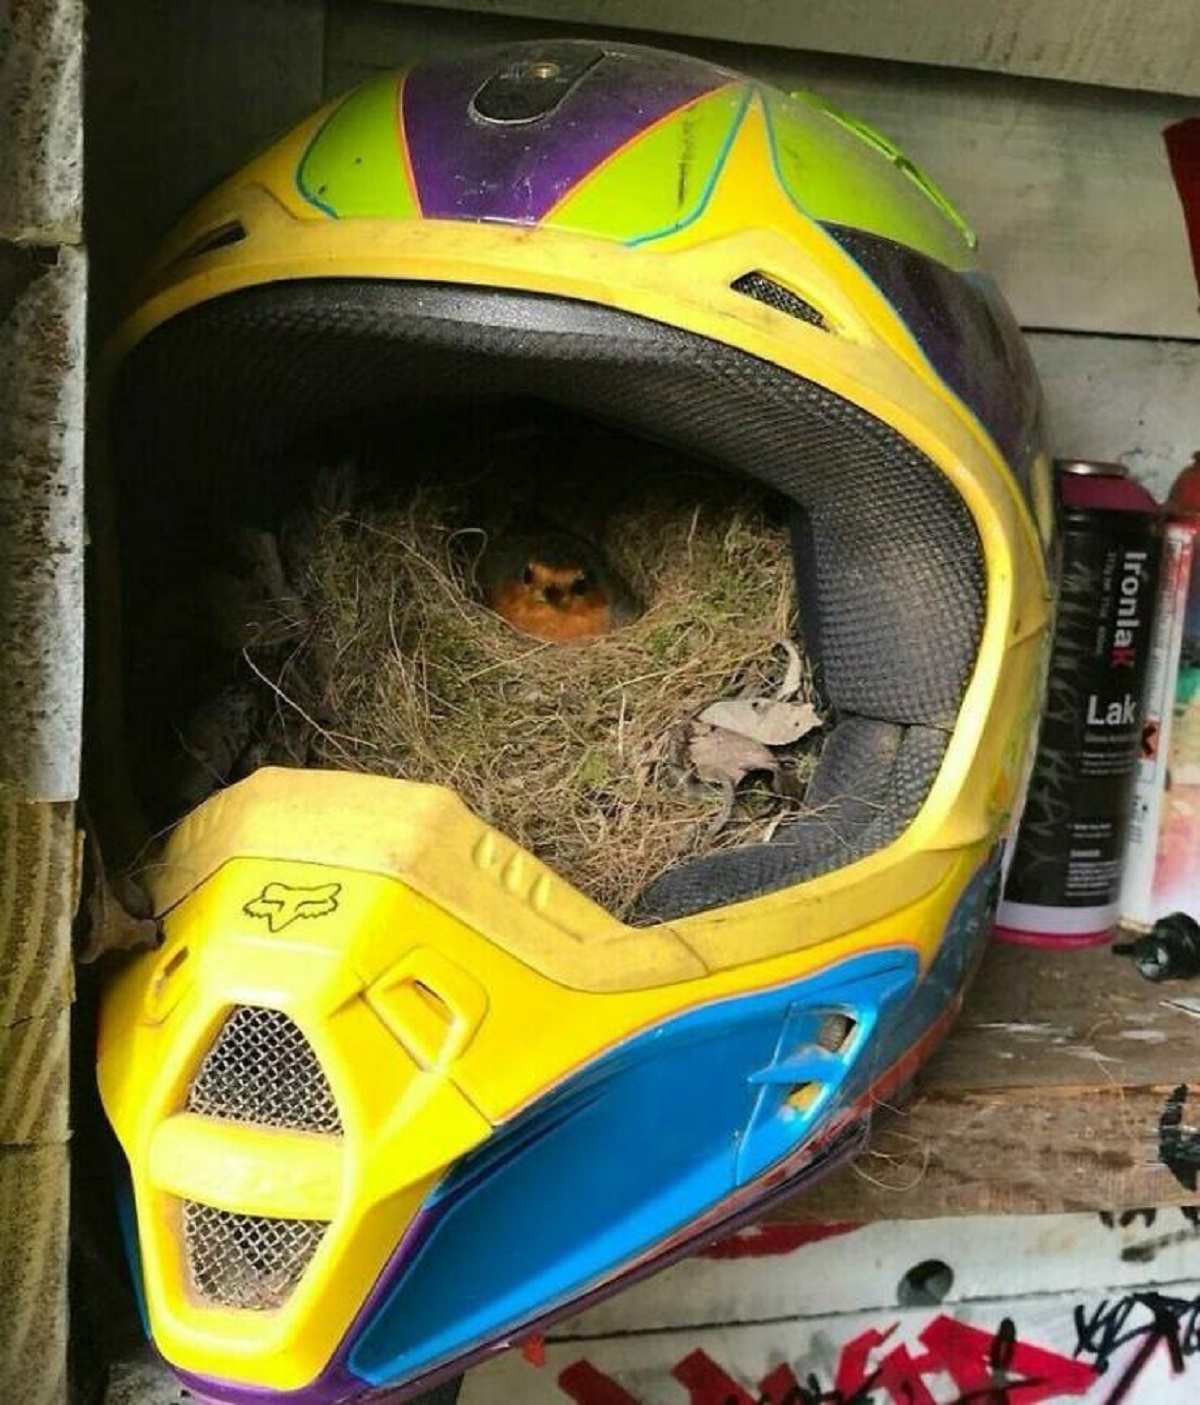 "A Robin Nested Inside Of A Motorcross Helmet"